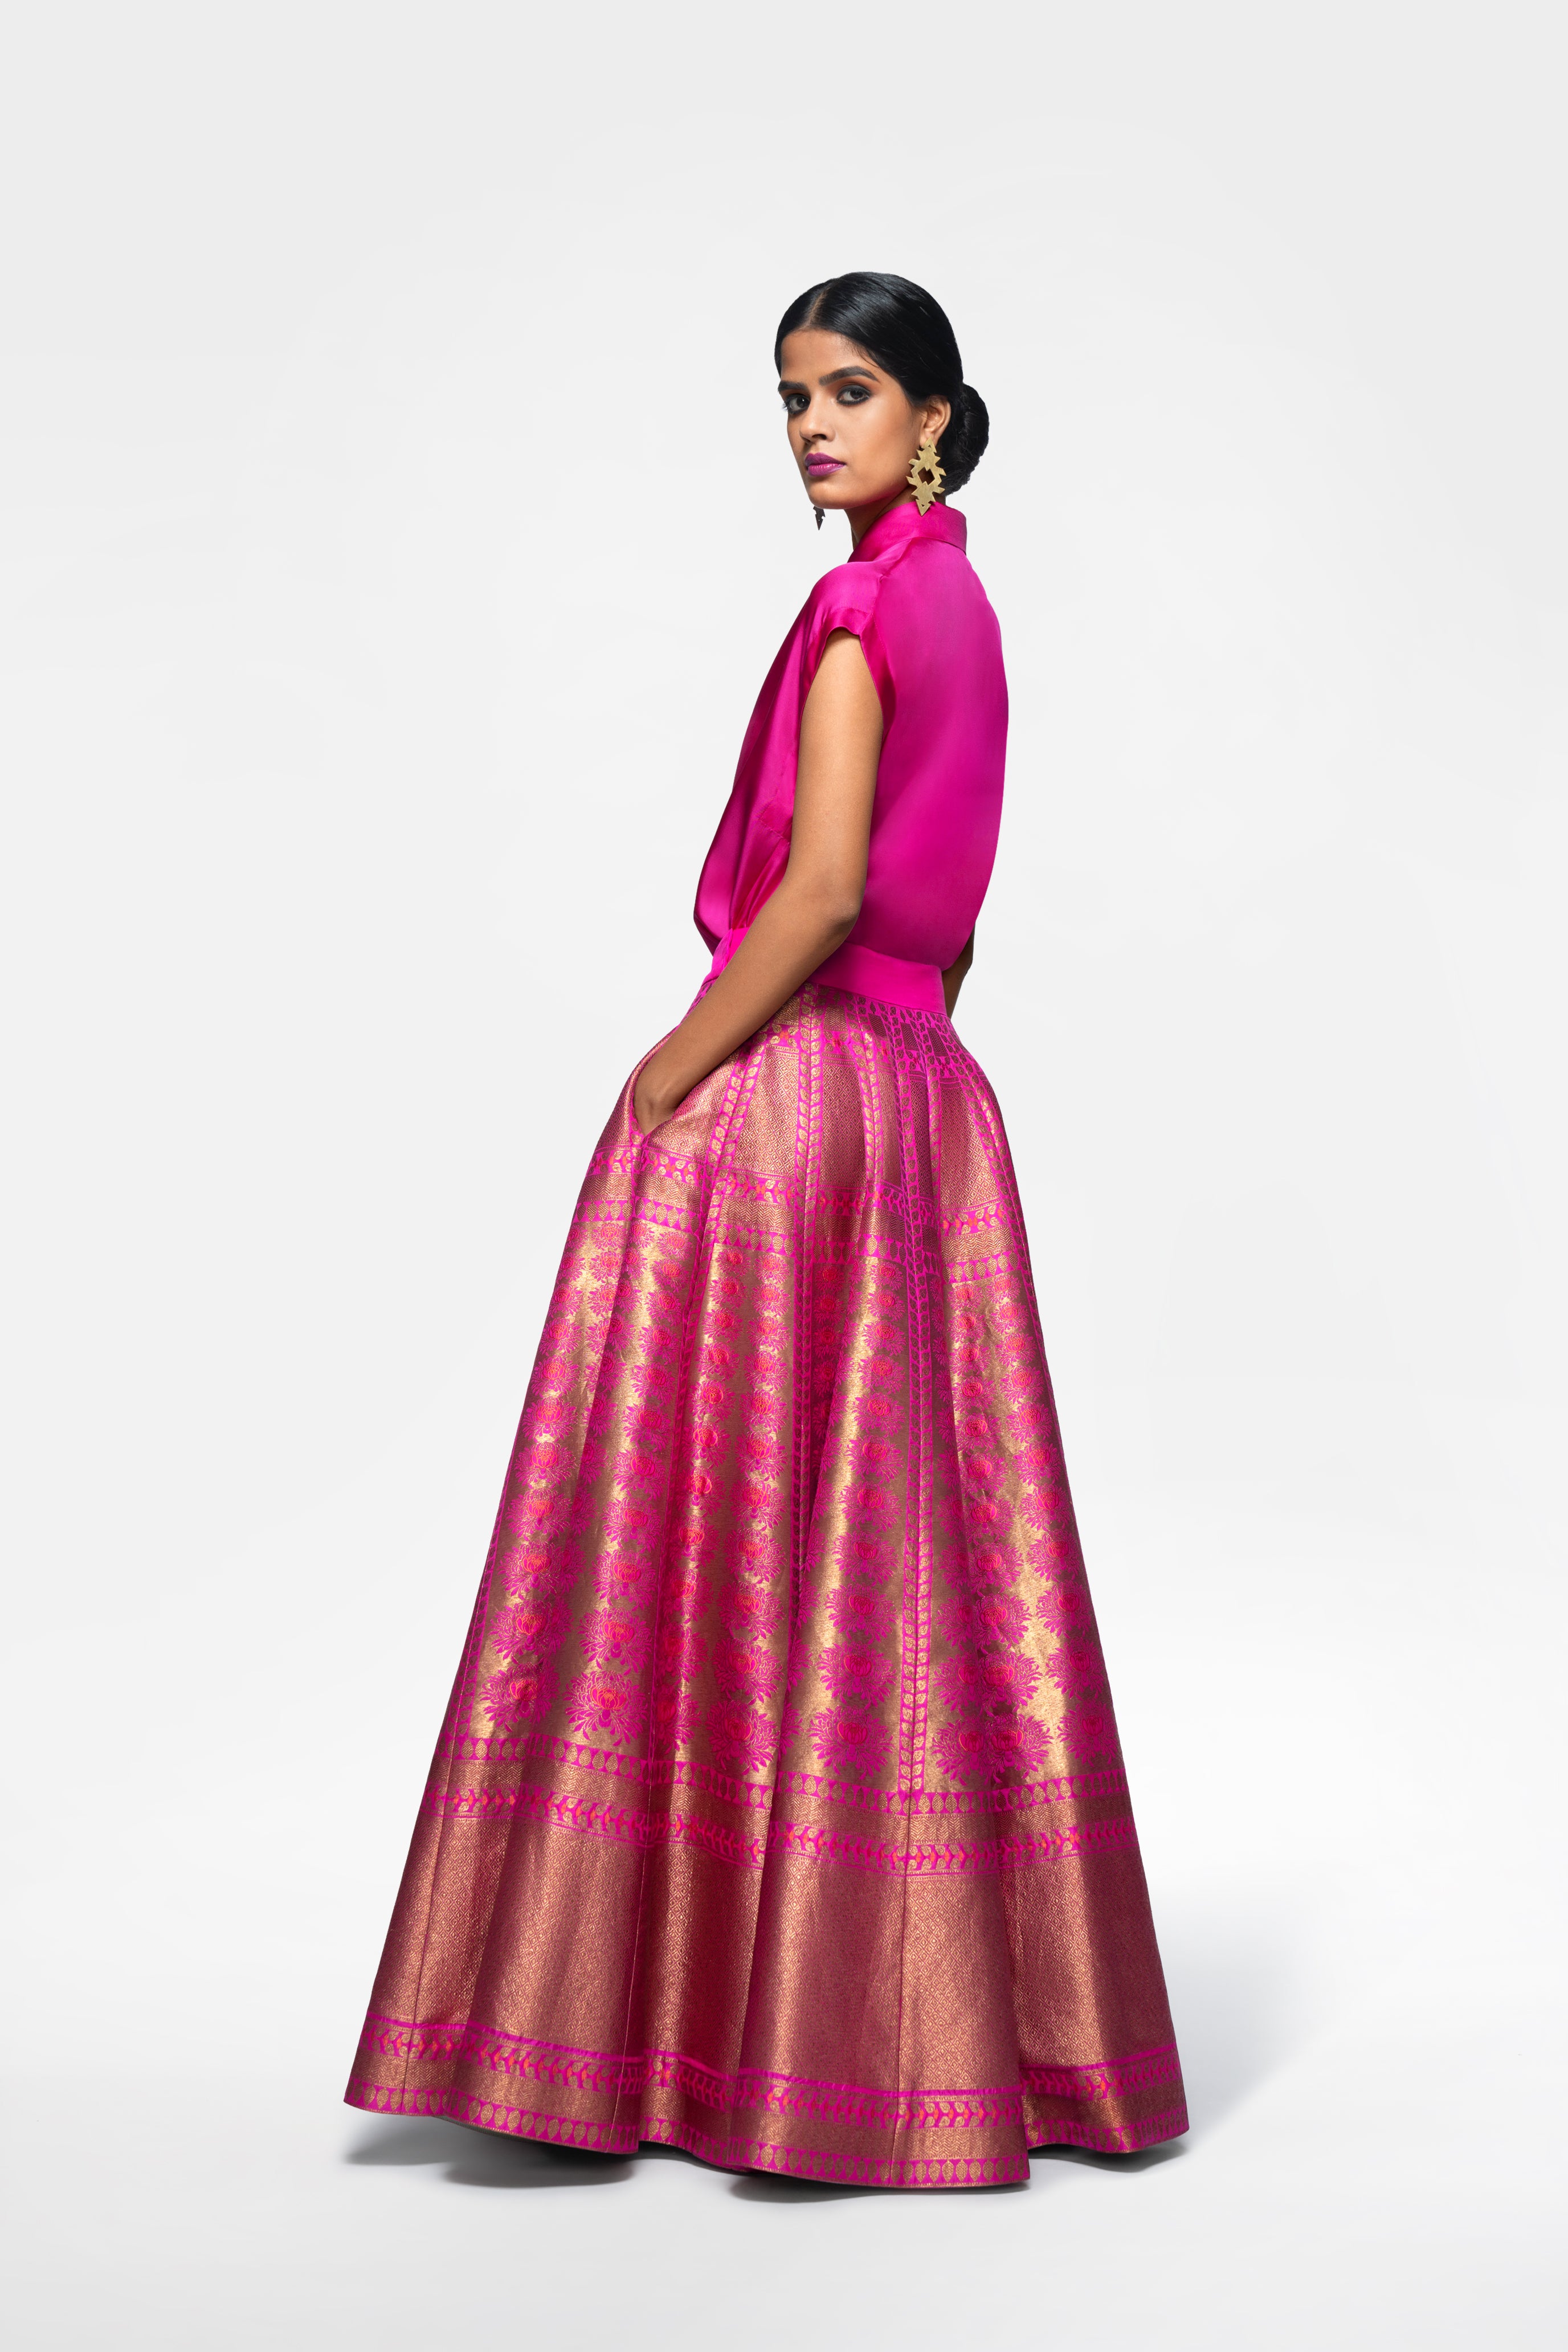 payalkhandwala - AW/2015 - Satin Pleated Poncho and Brocade Lehenga | Payal  khandwala, Indian fashion, Style